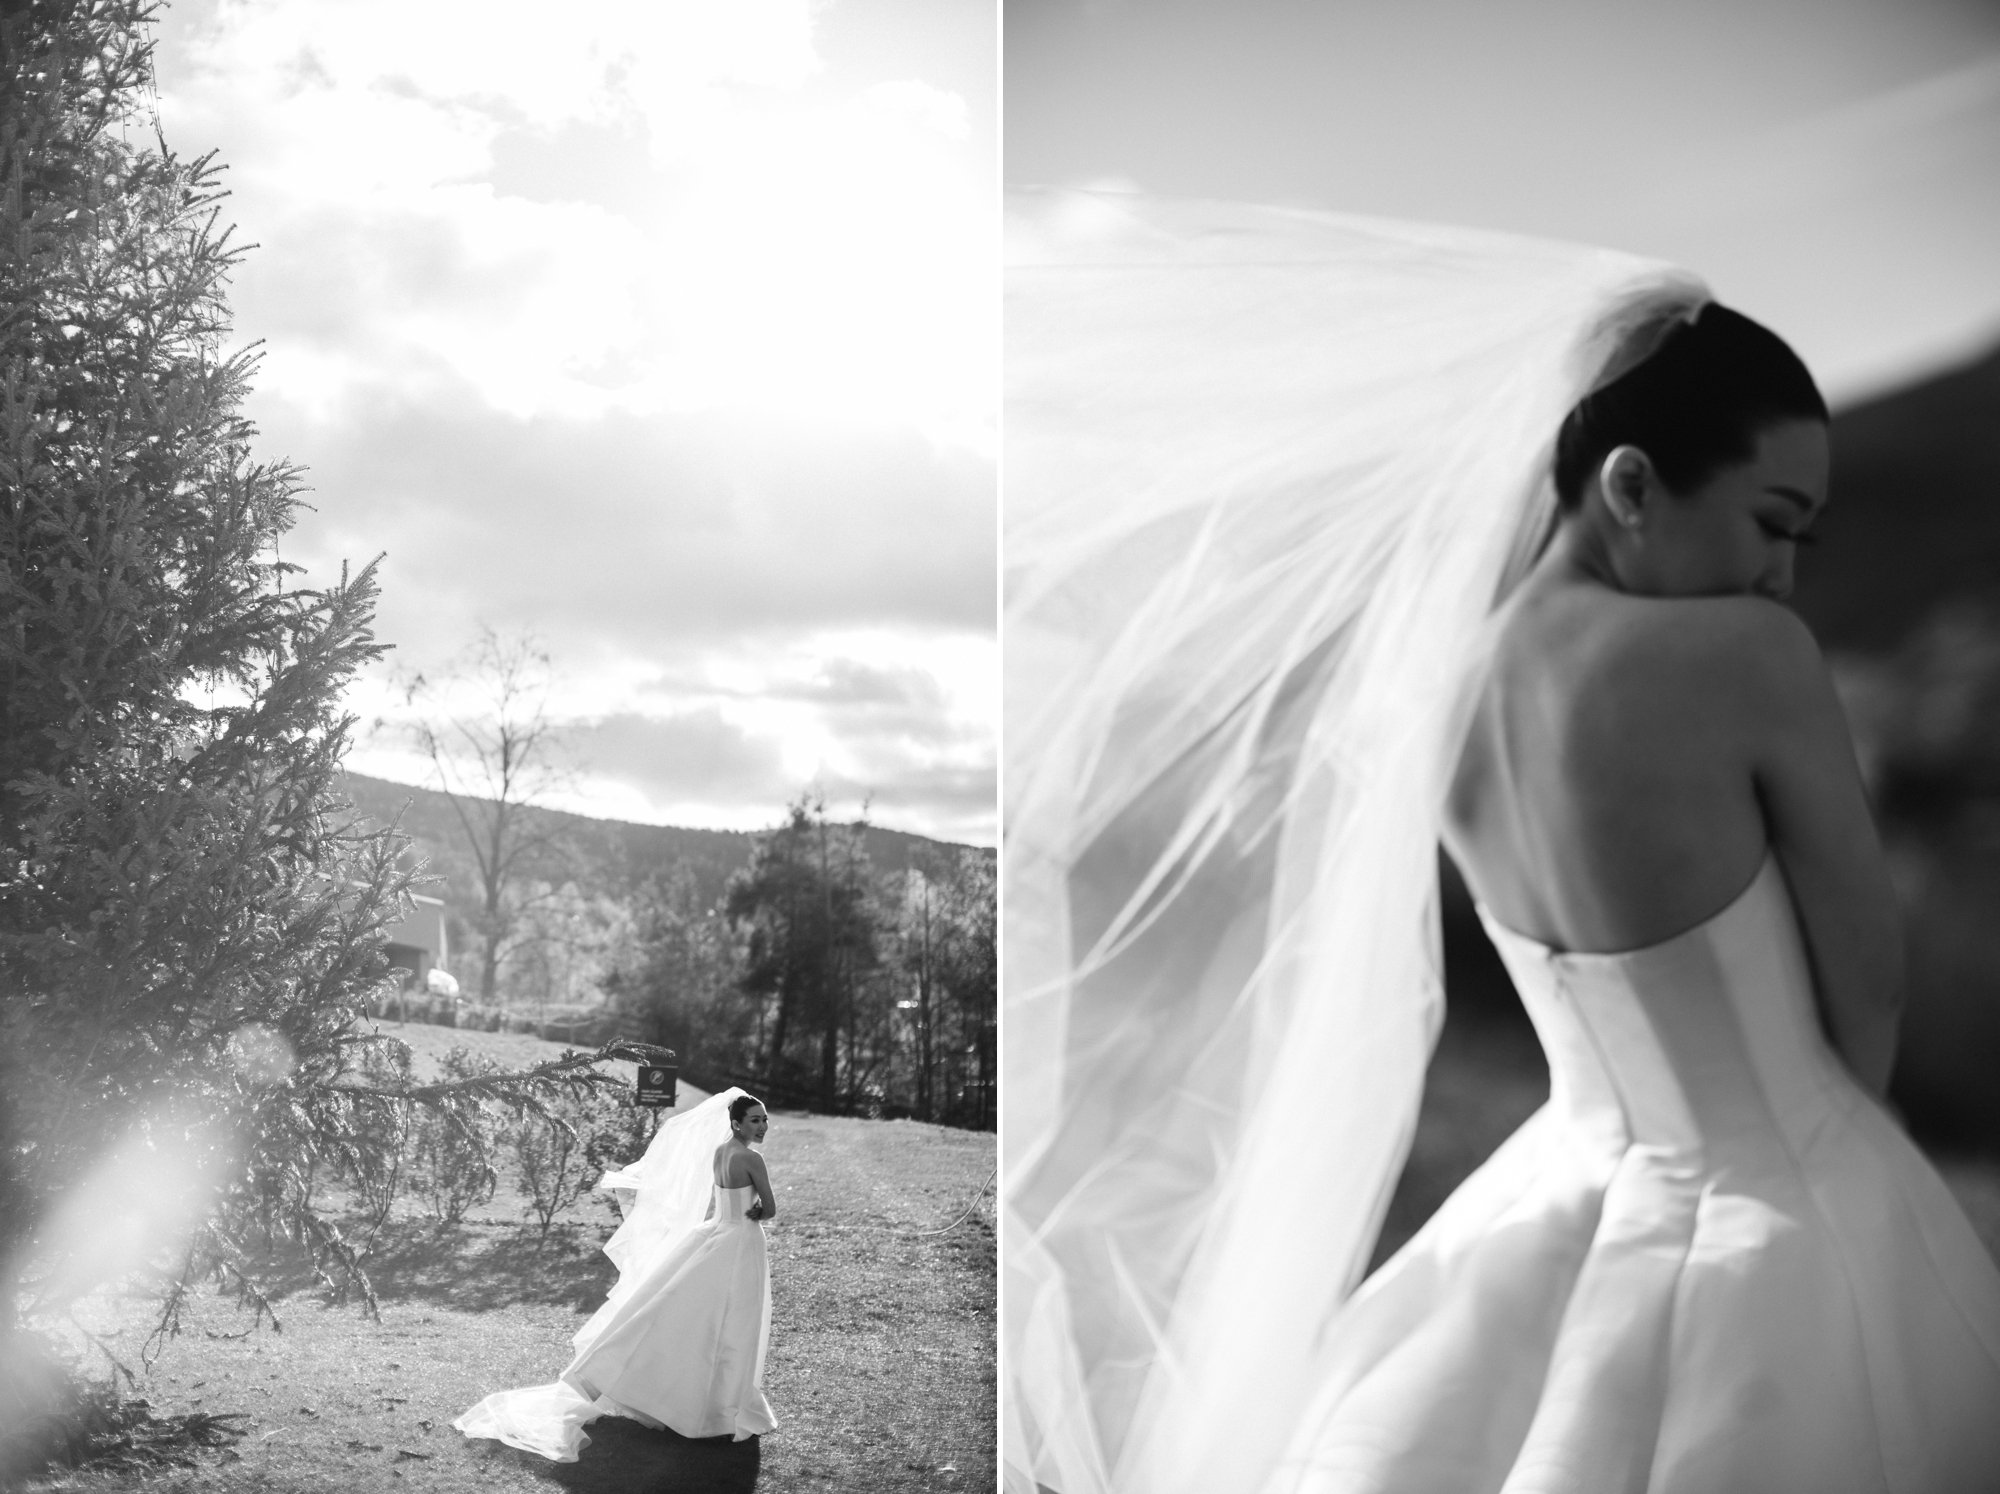 Prawira-Evelyn-Dolomites-Italy-Santre wedding-Yefta Gunawan-Jeriko MUA-Carol Kuntjoro Photography-96.jpg